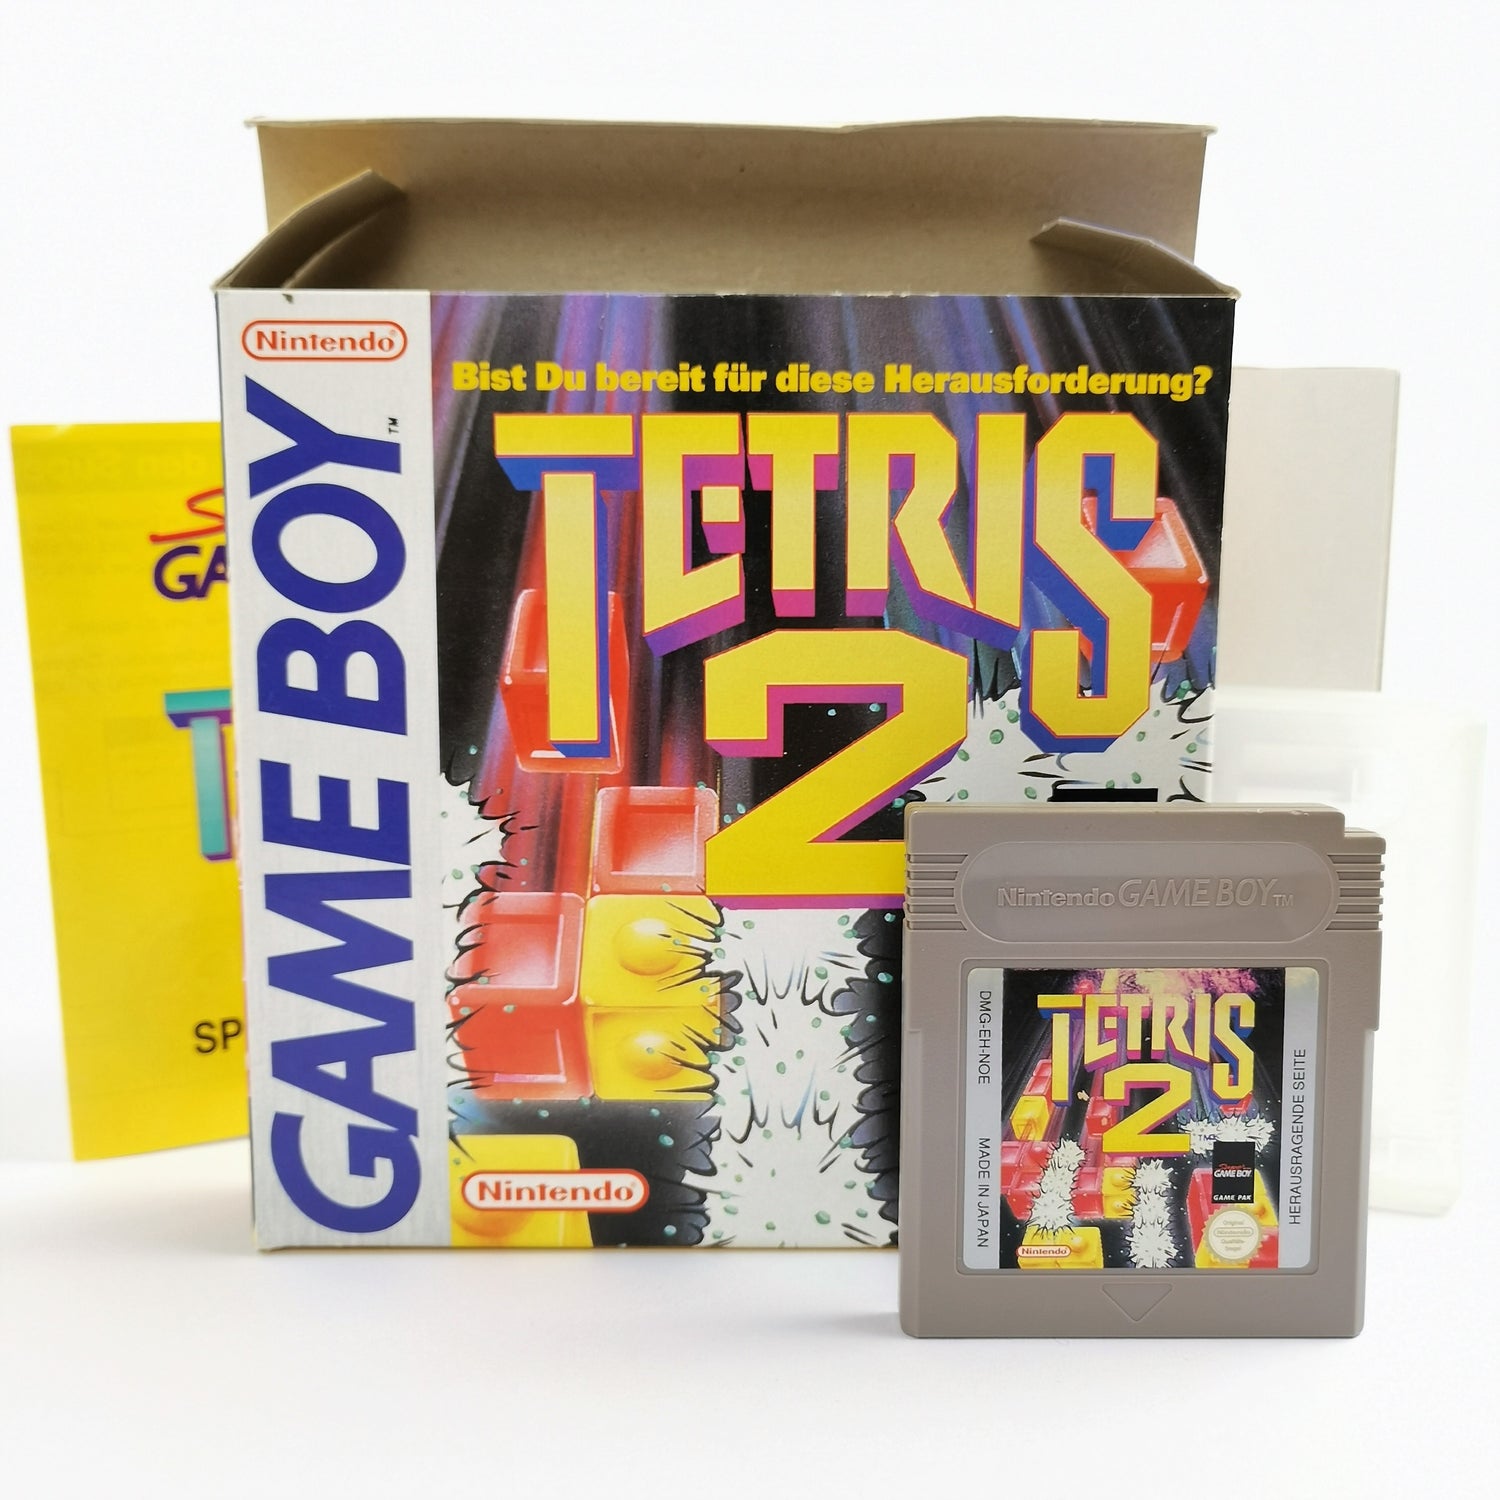 Nintendo Game Boy Classic Game: Tetris 2 | Gameboy OVP PAL